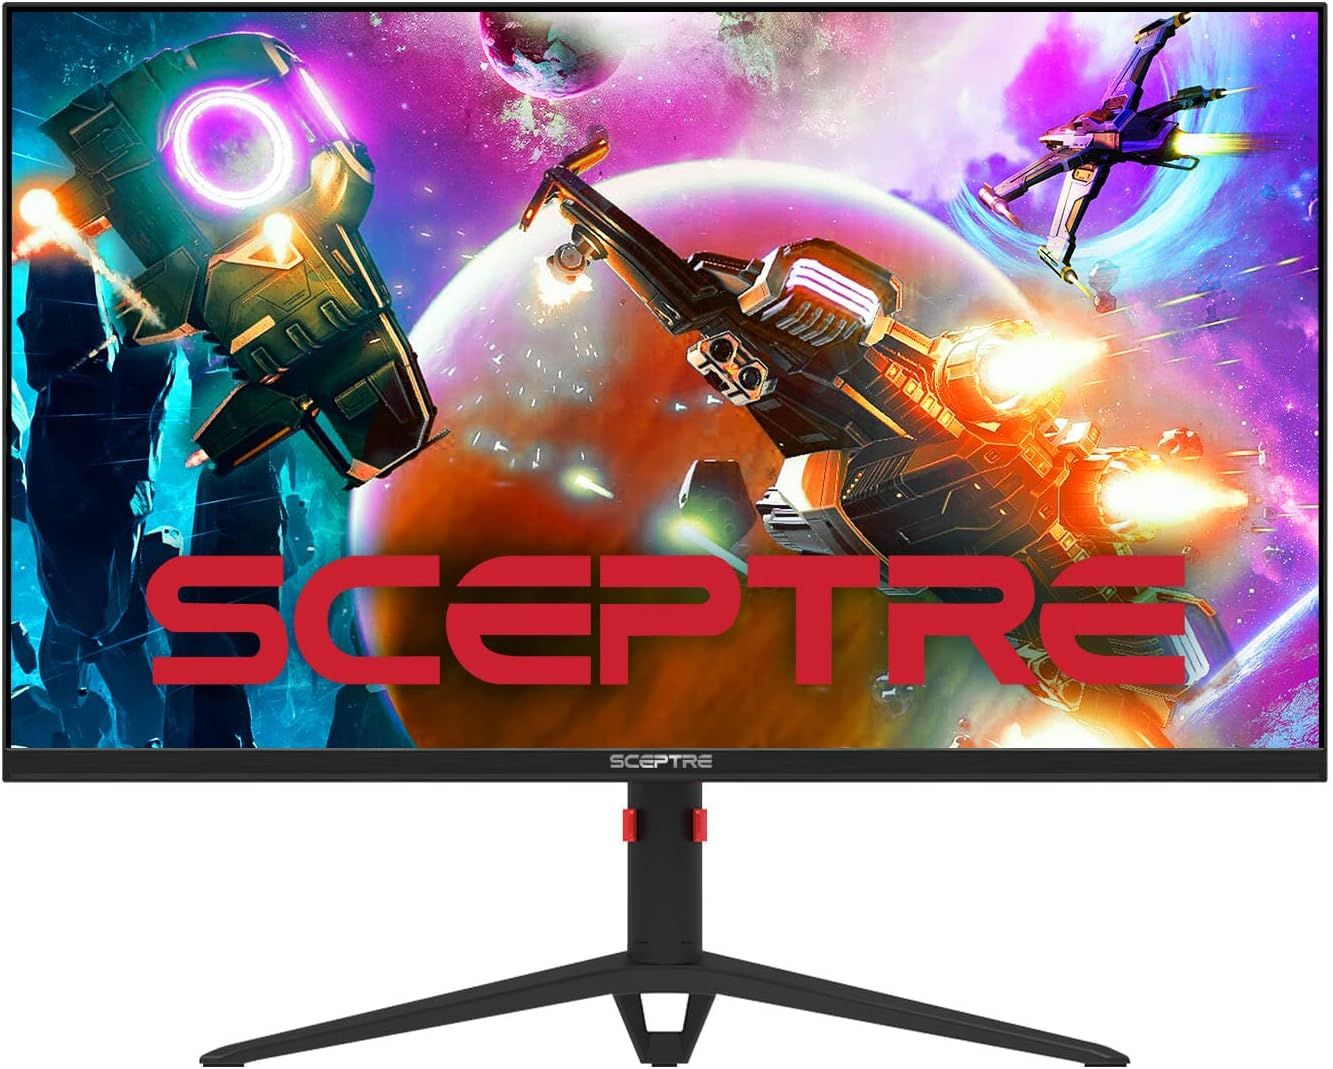 Sceptre 27-inch IPS 2K Gaming Monitor